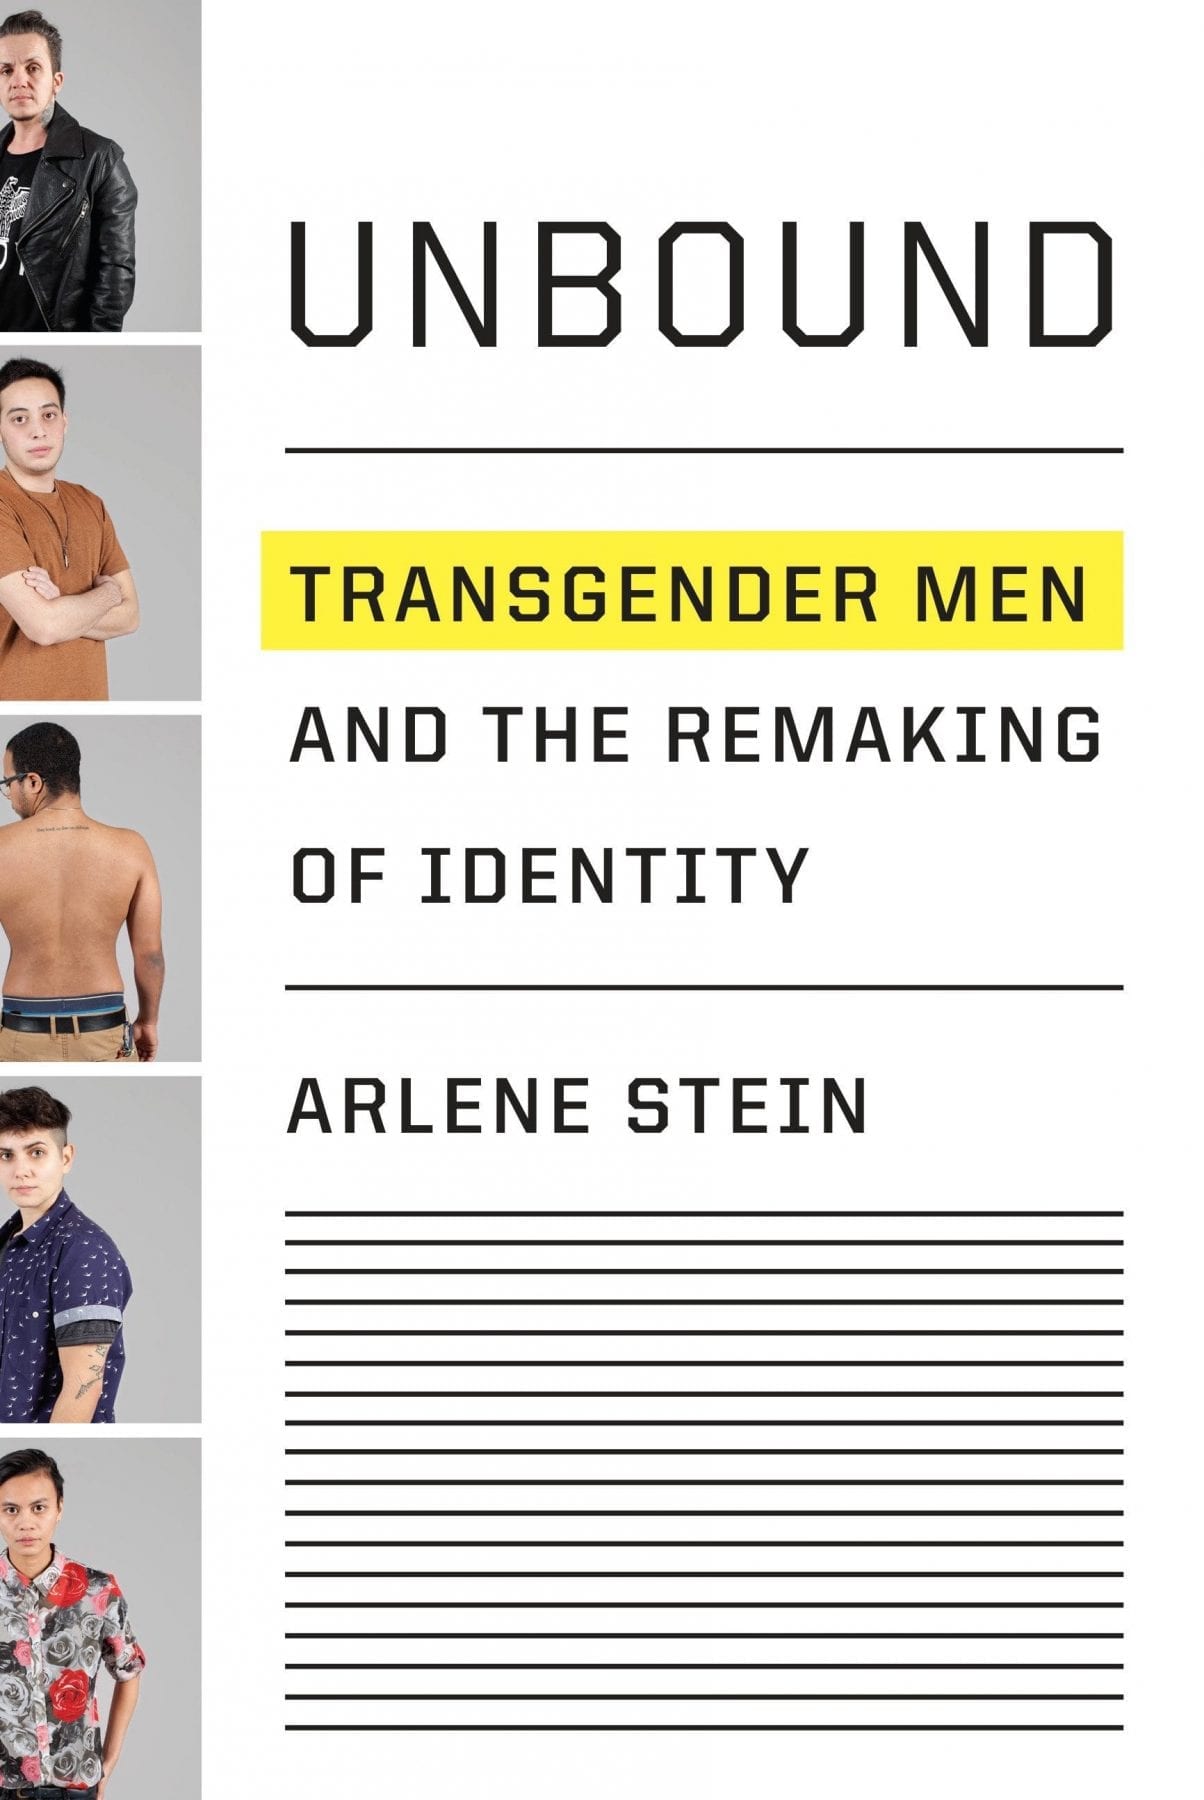 Unbound: Transgender Men and the Remaking of Identity by Arlene Stein